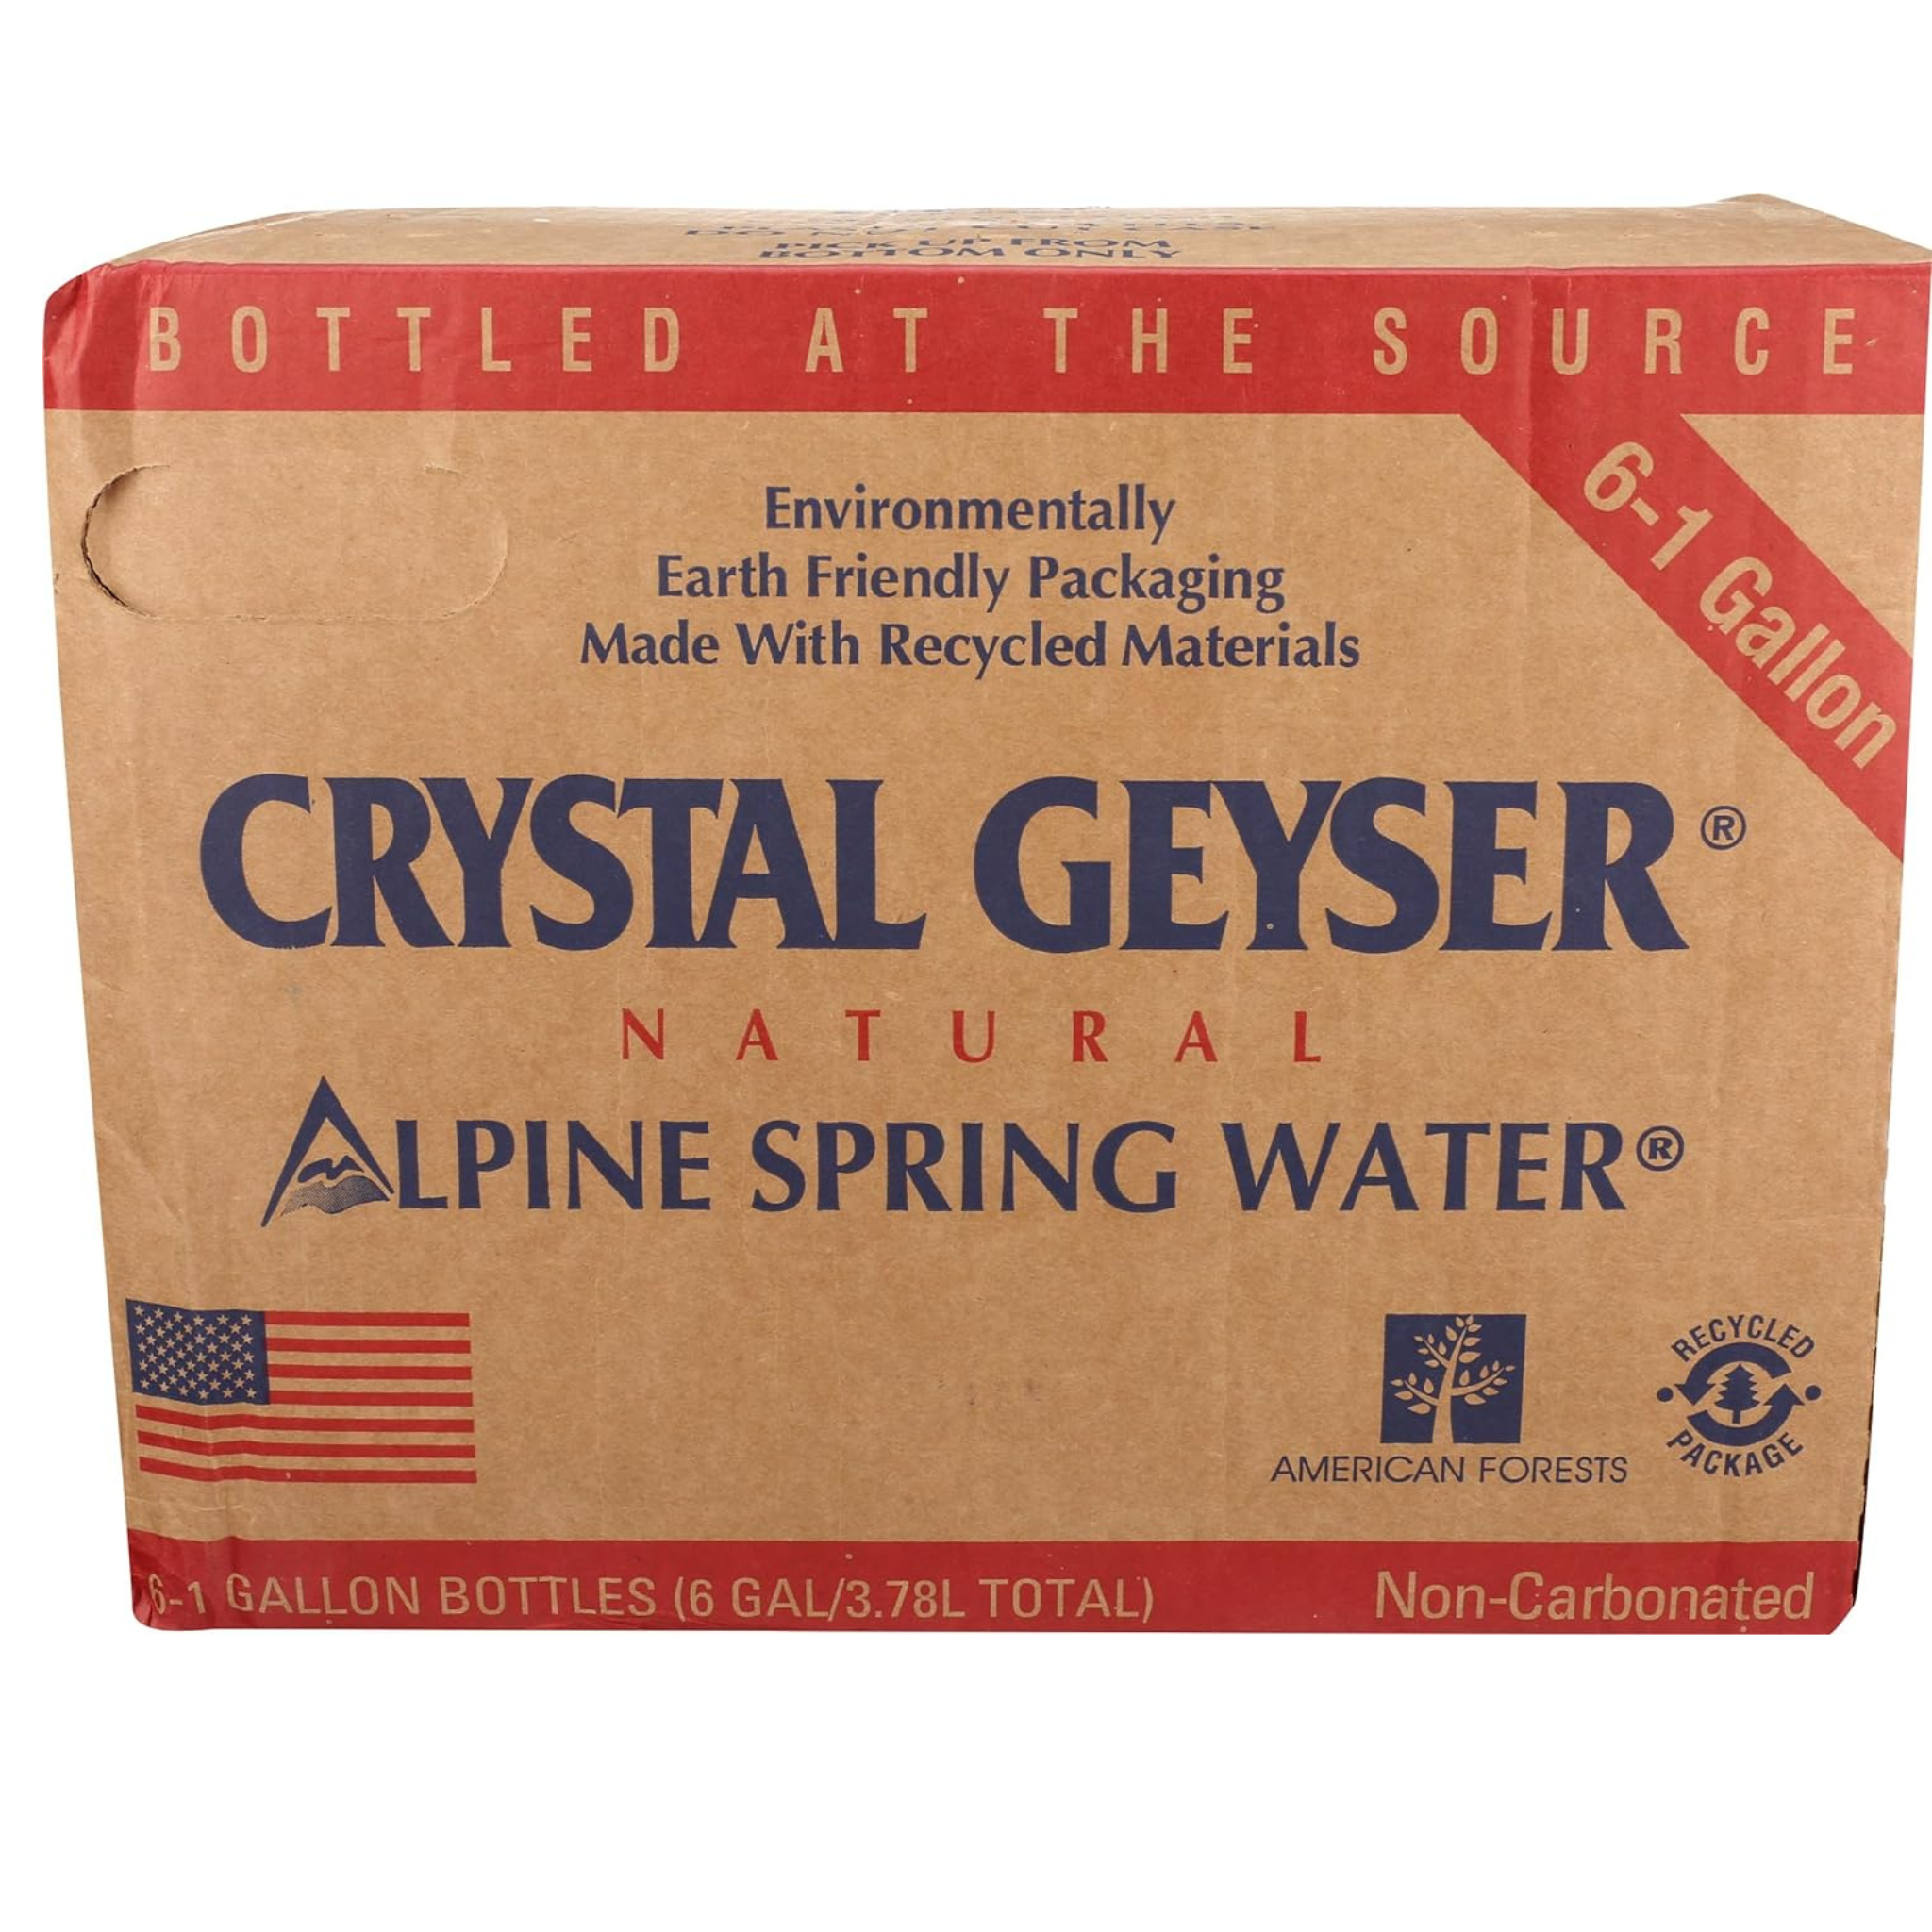 6 Bottles of Crystal Geyser Natural Alpine Spring Water